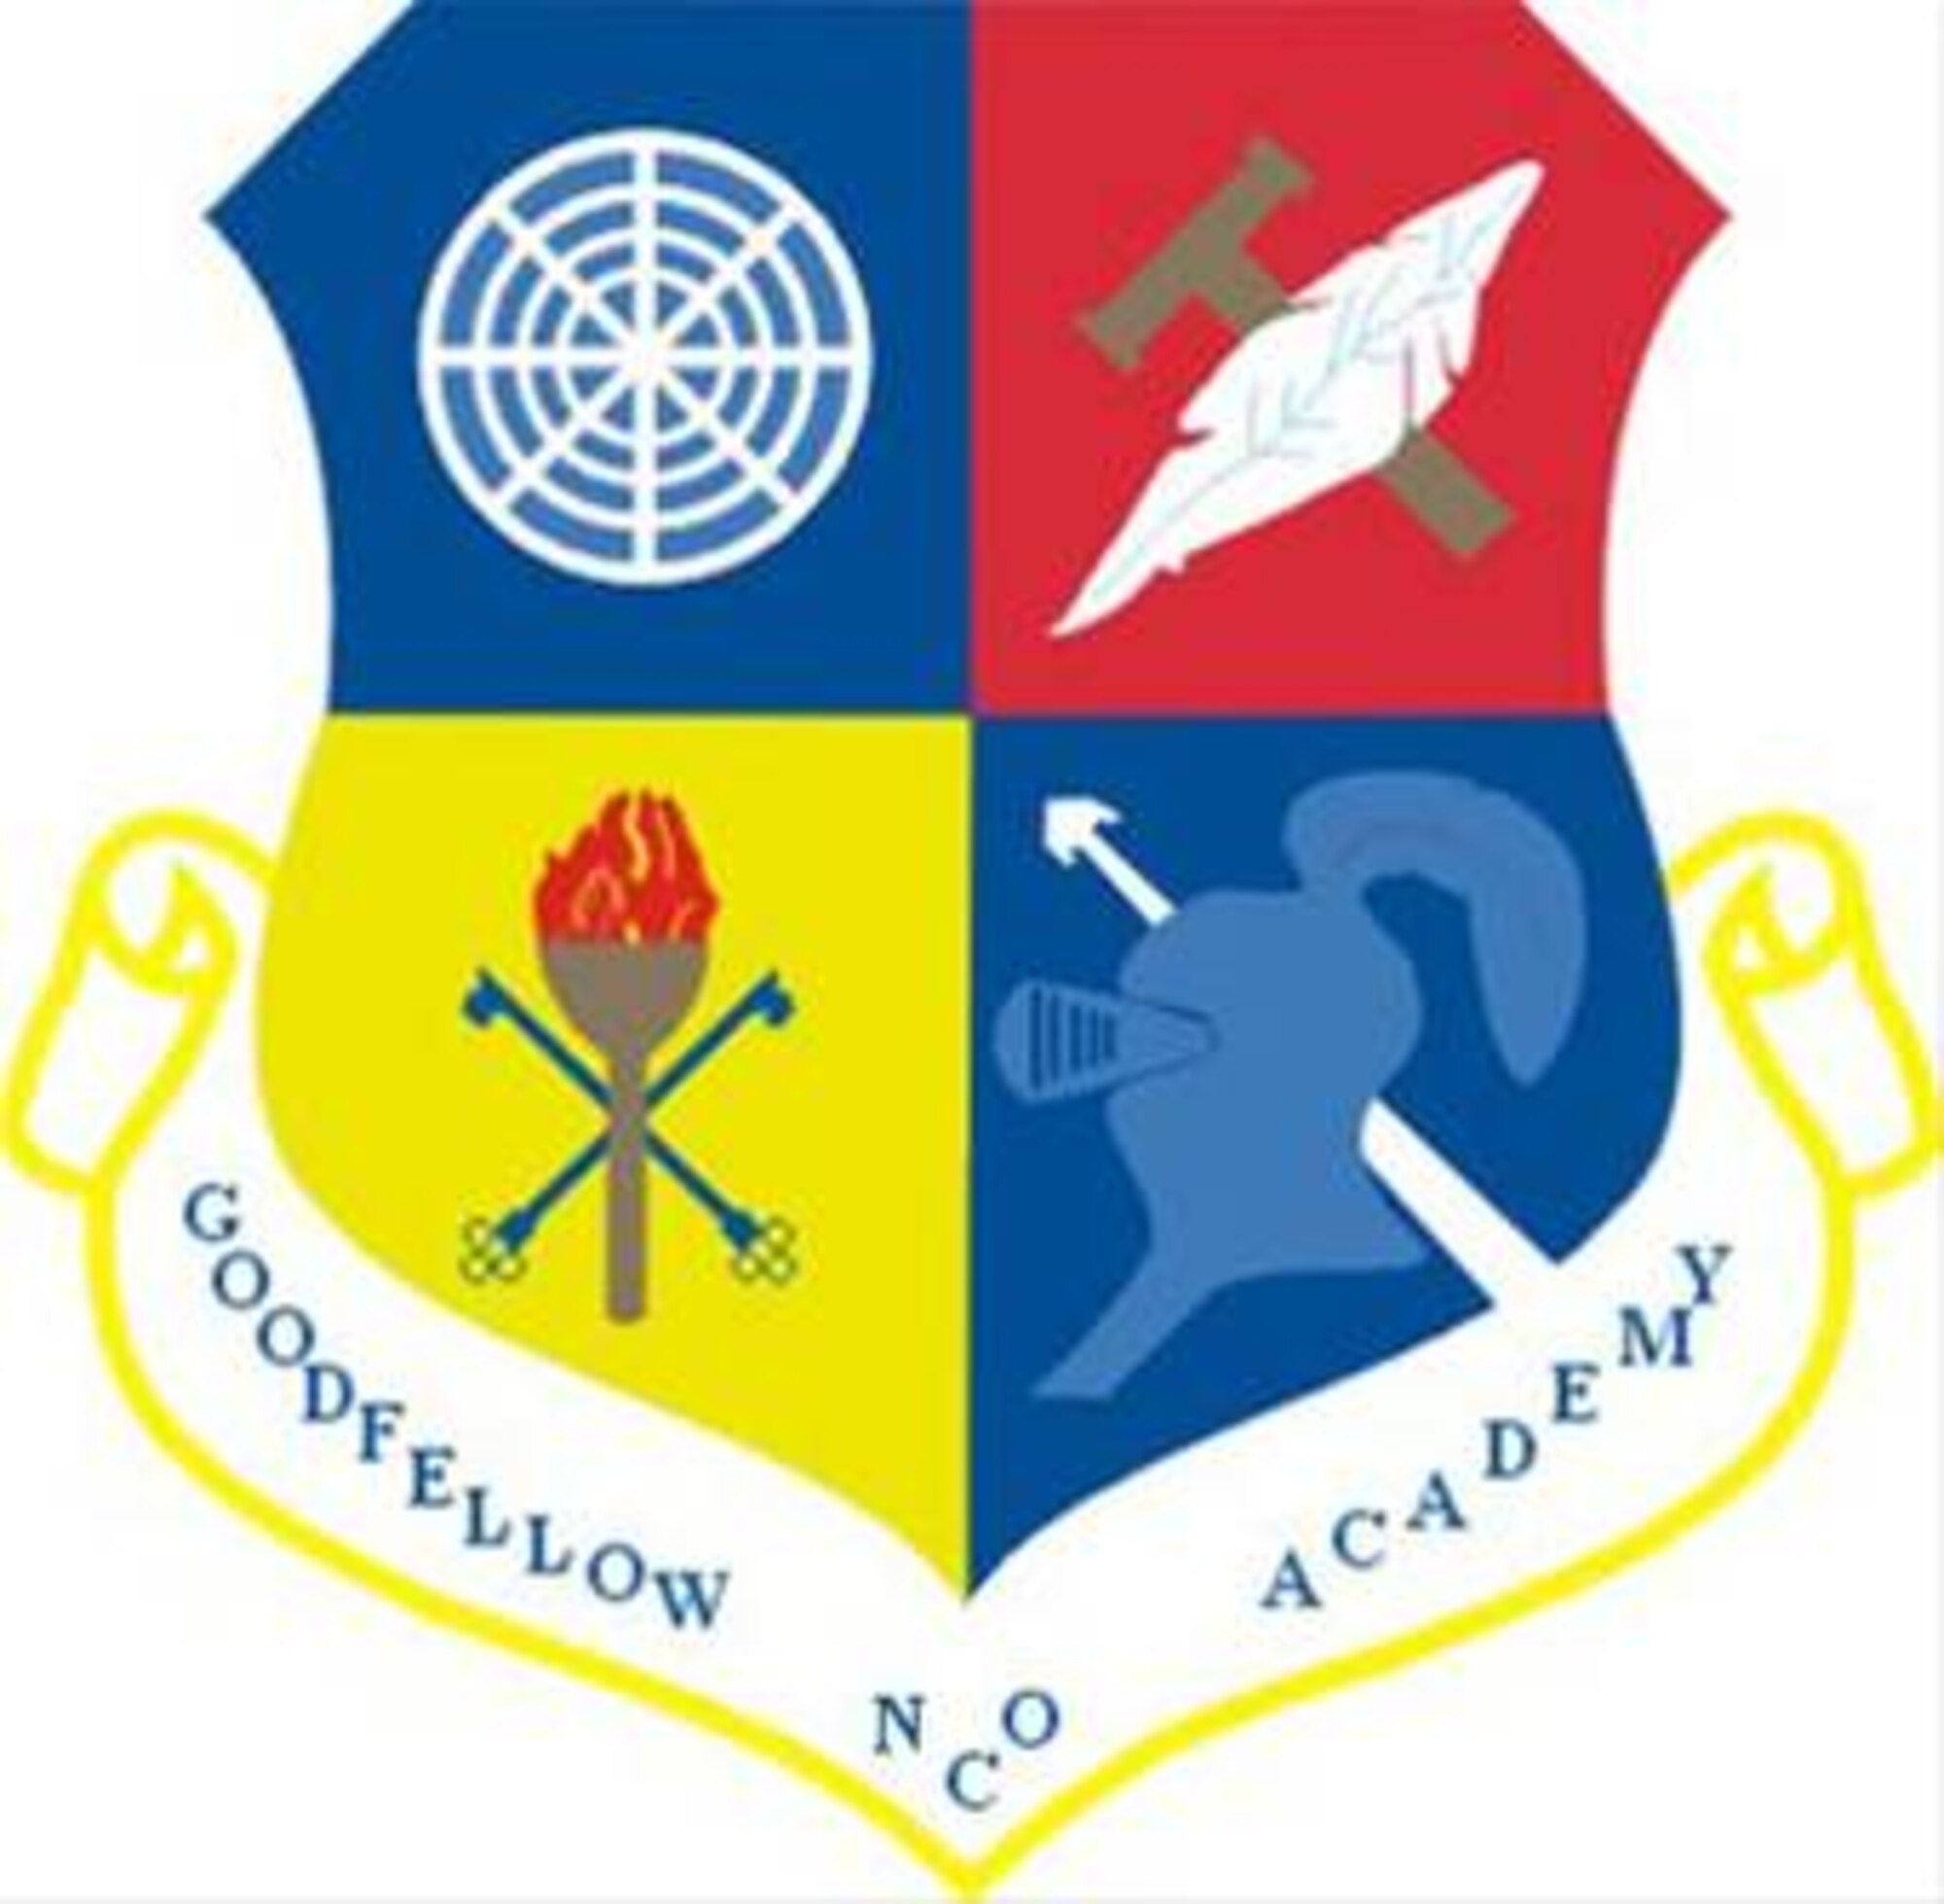 Goodfellow NCO Academy